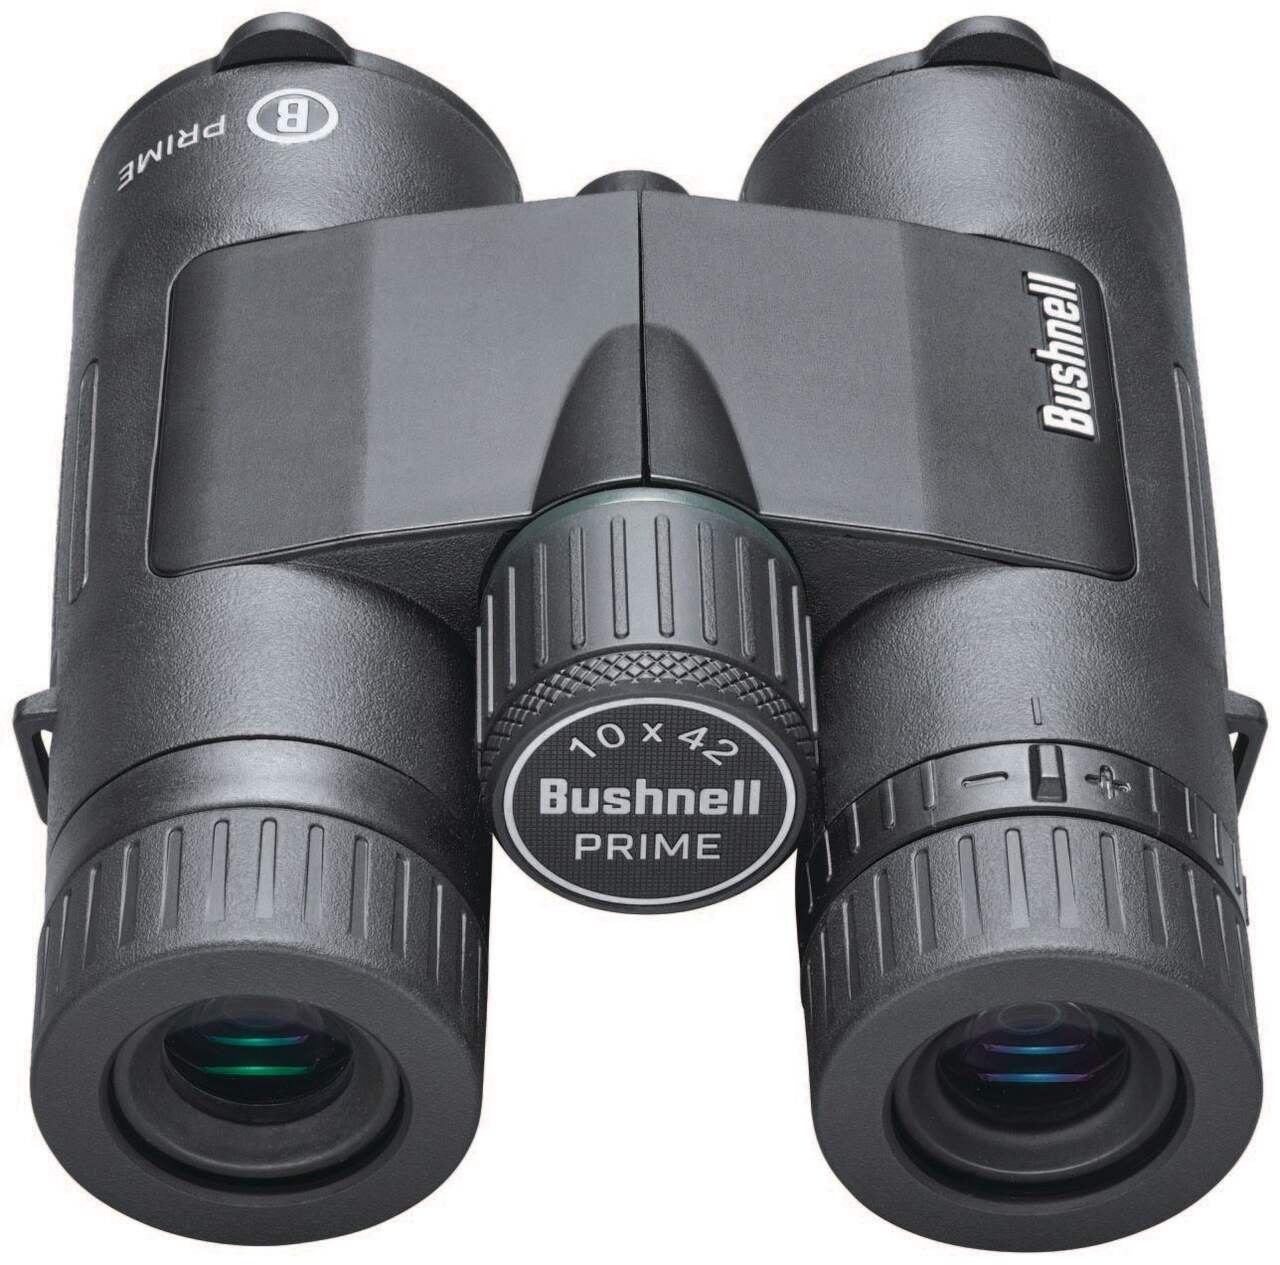 Bushnell Prime Binoculars, Black, 10x42mm